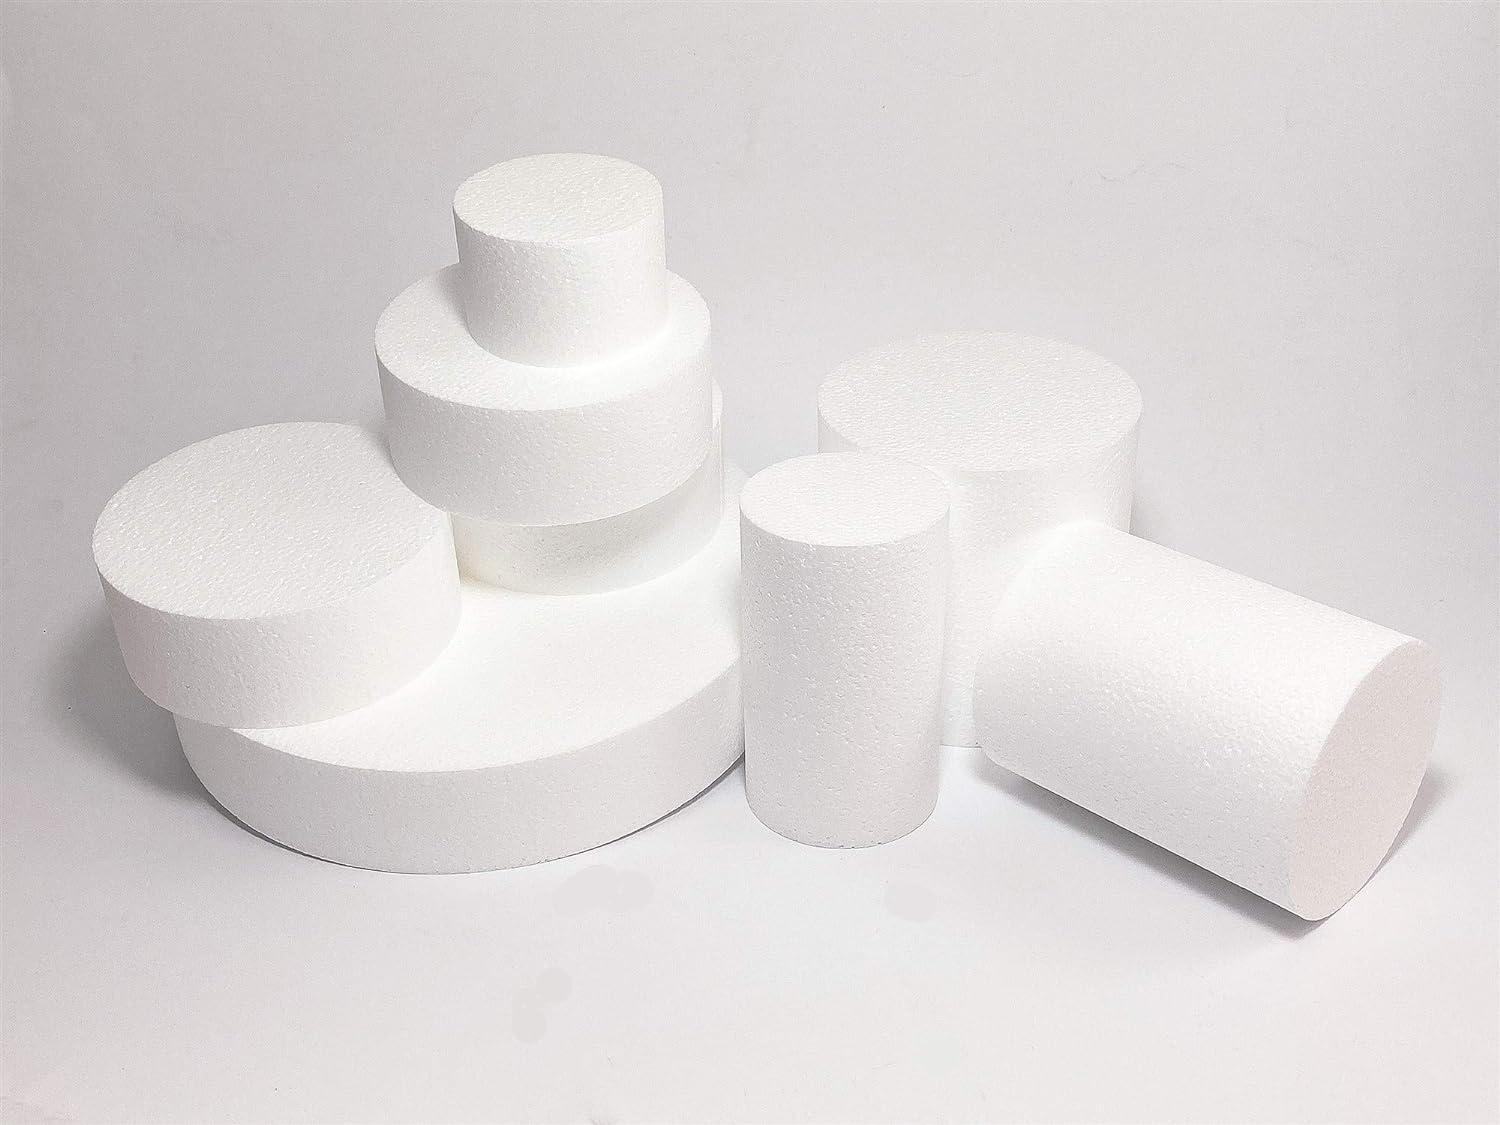 12 Pack Square Foam Blocks, Polystyrene Foam Brick for Crafts, 4 x